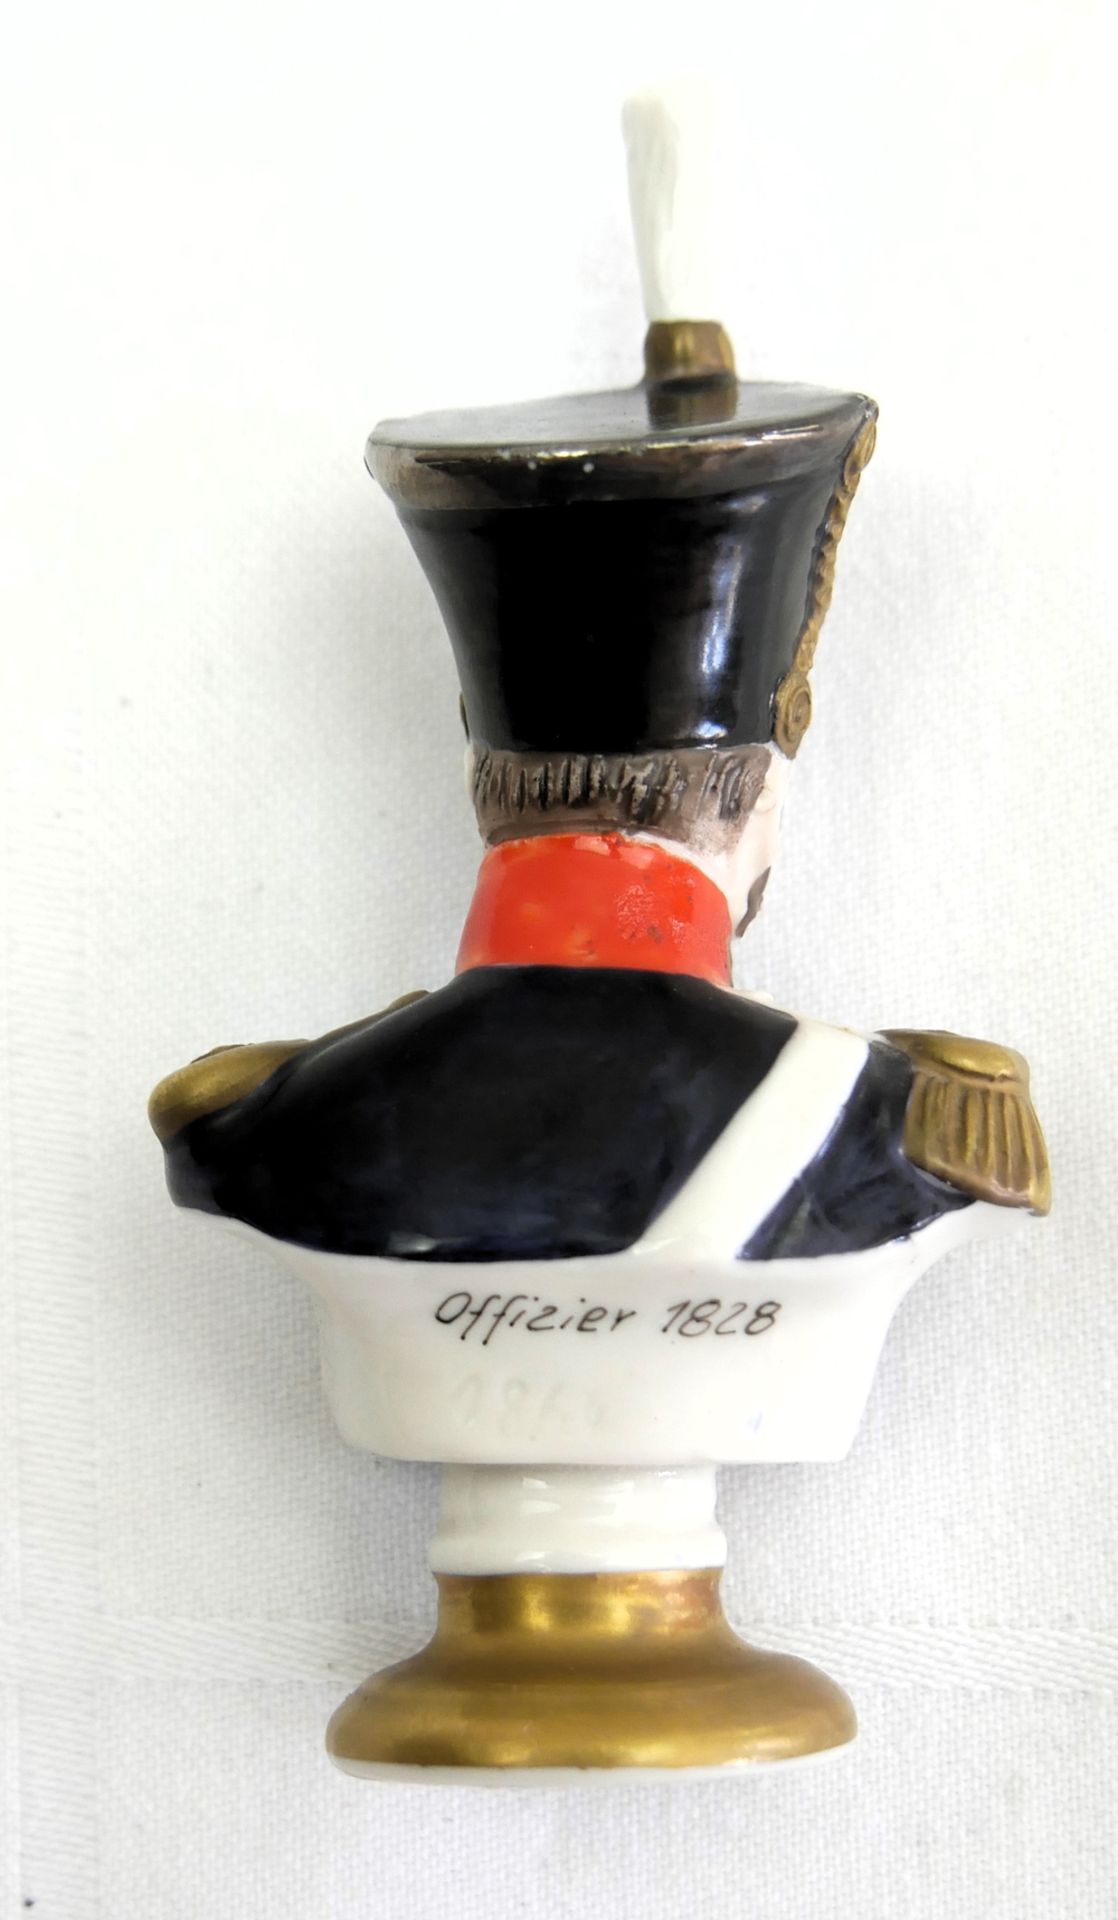 Kister Porzellan Figur "Offizier 1828" Mütze leicht bestoßen. Höhe ca. 10 cm - Bild 2 aus 3